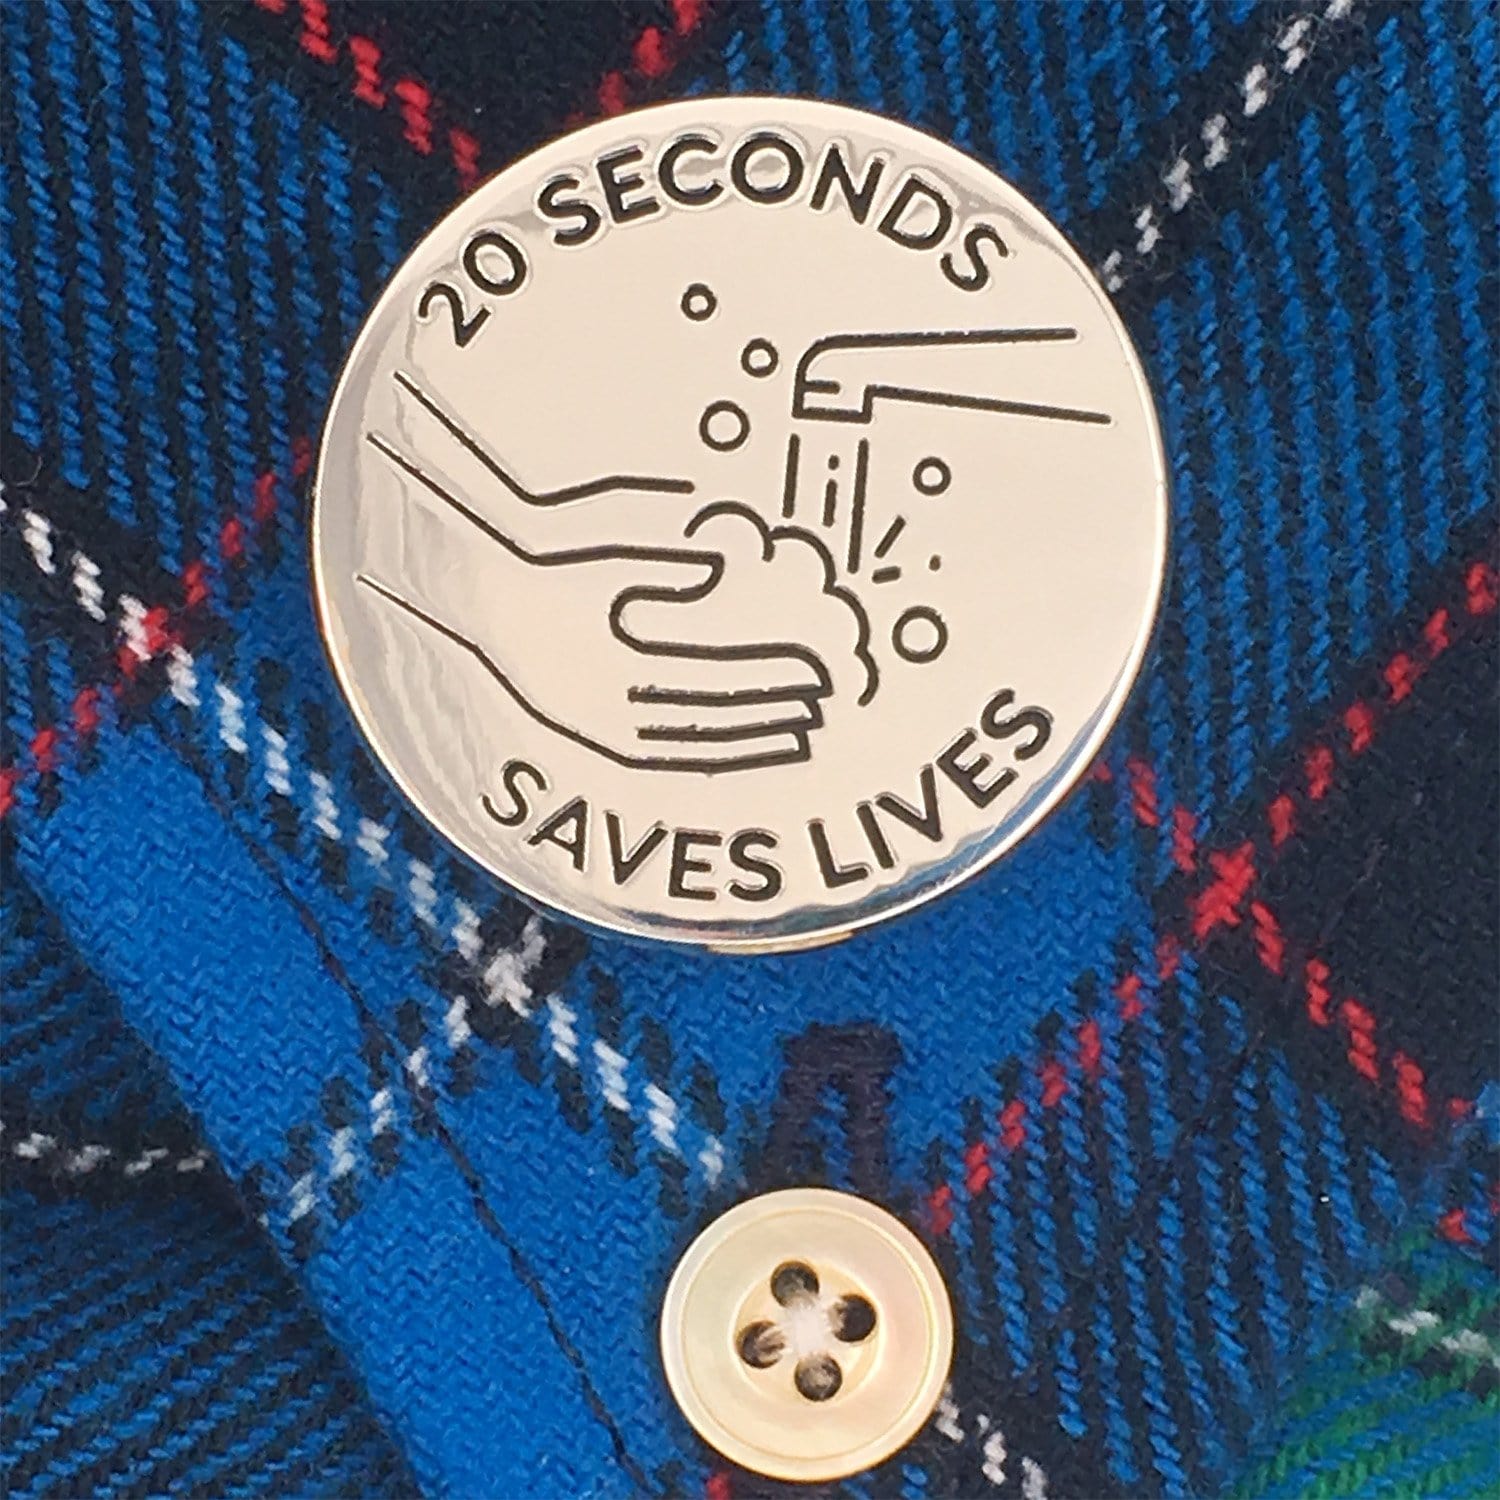 20 Seconds Saves Lives Handwashing Pin